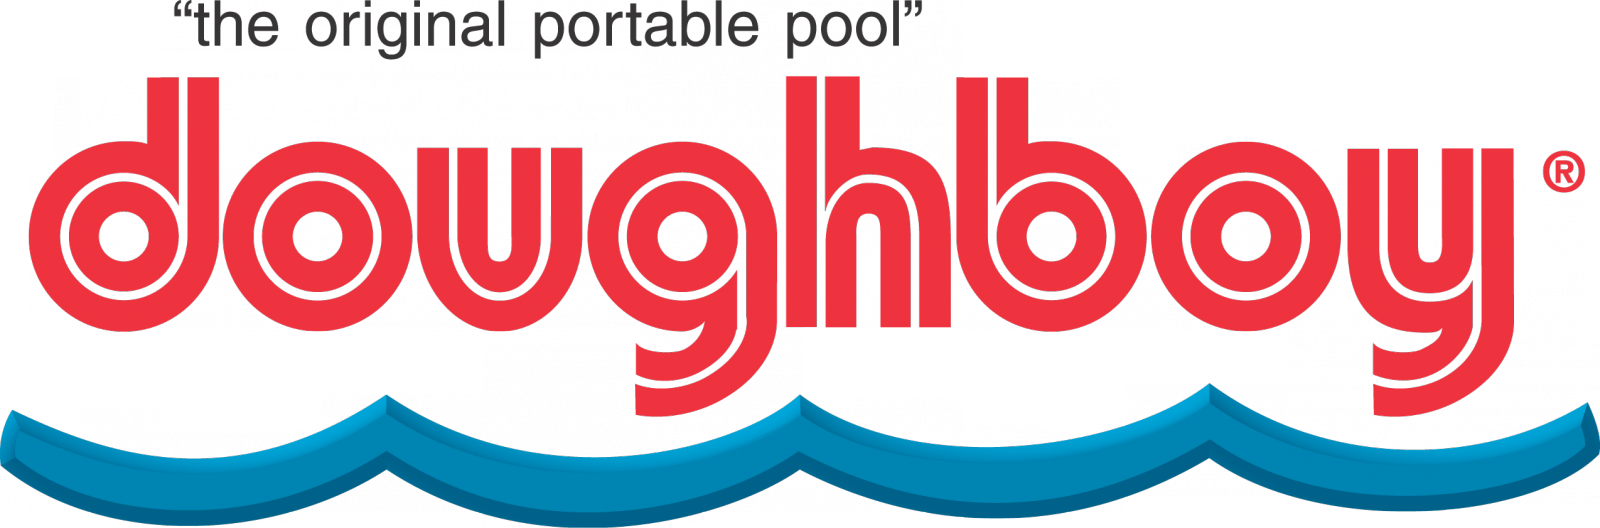 https://splashtimepoolsandspas.com/wp-content/uploads/2019/04/Doughboy-Logo-1.png